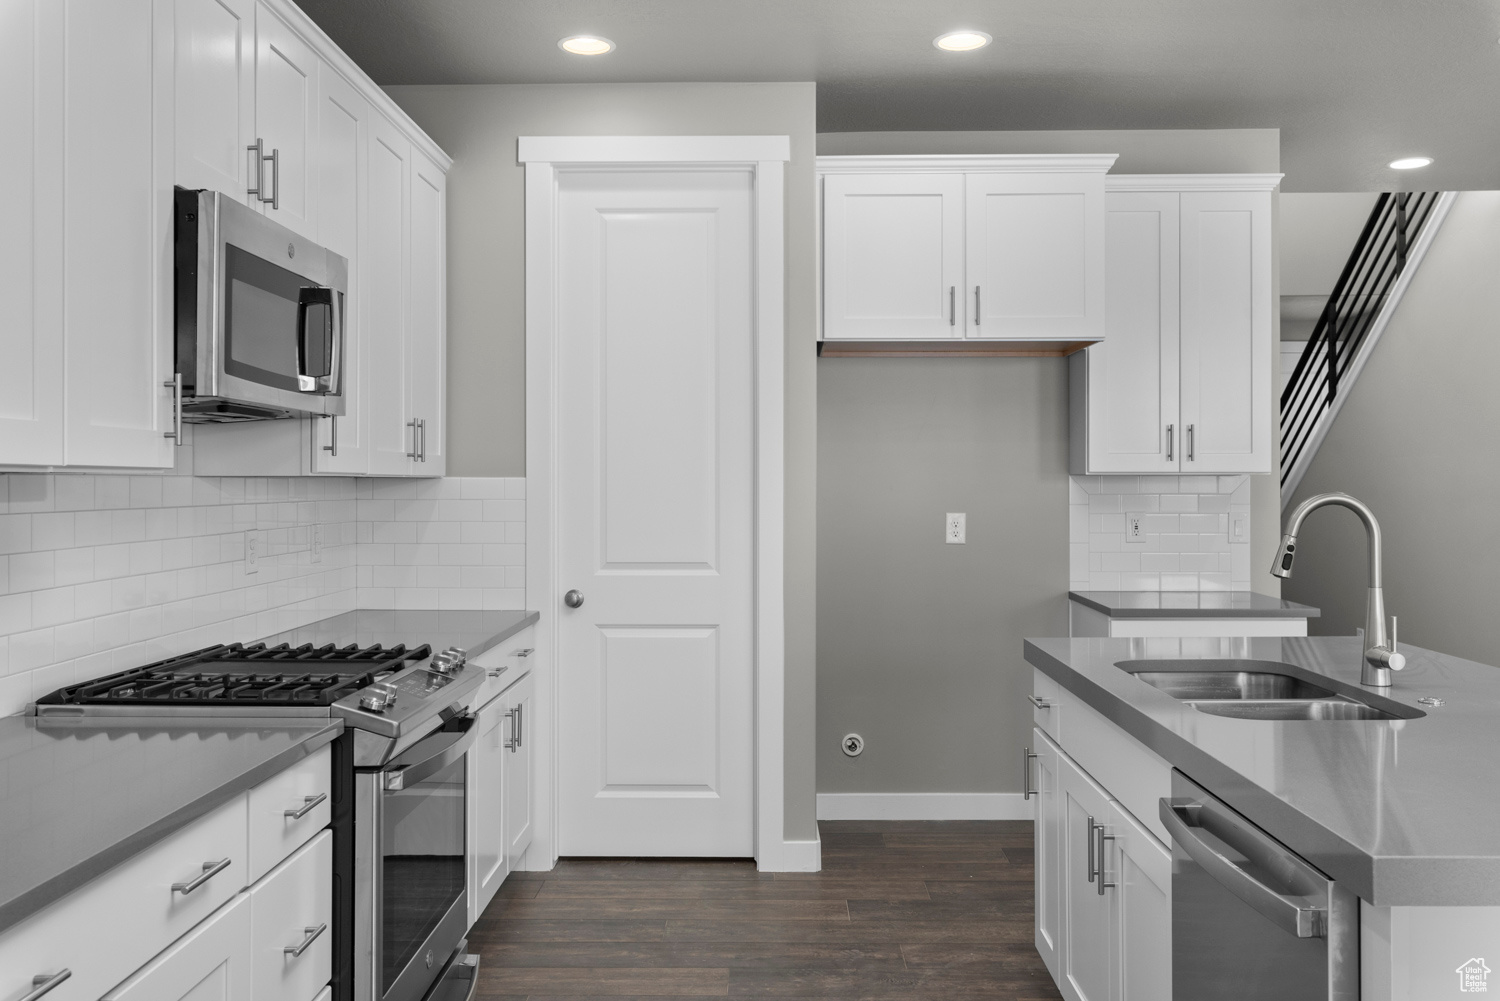 Kitchen with stainless steel appliances, dark hardwood / wood-style floors, tasteful backsplash, white cabinetry, and sink